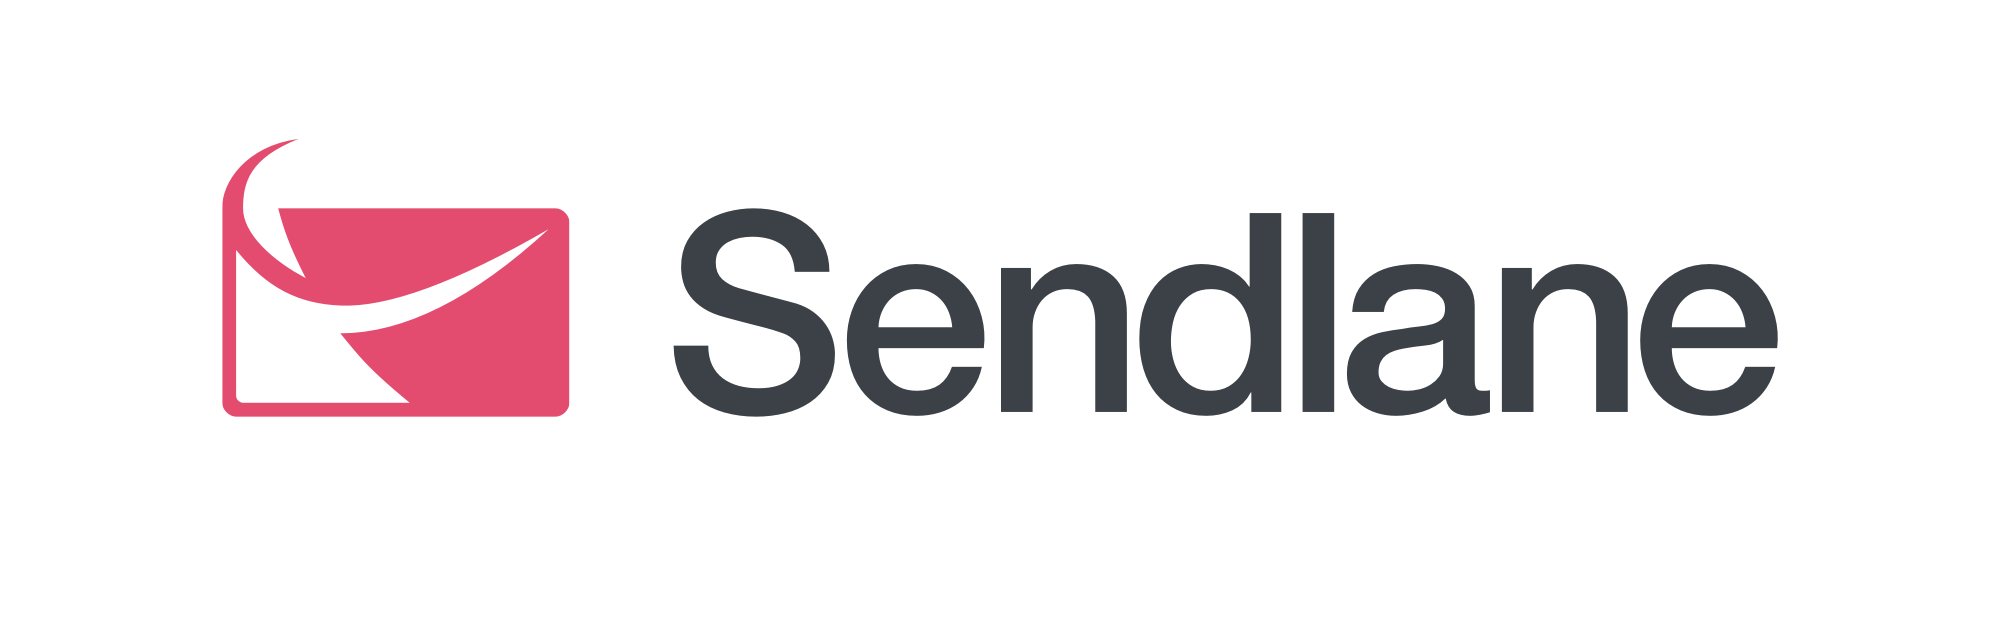 Sendlane logo large